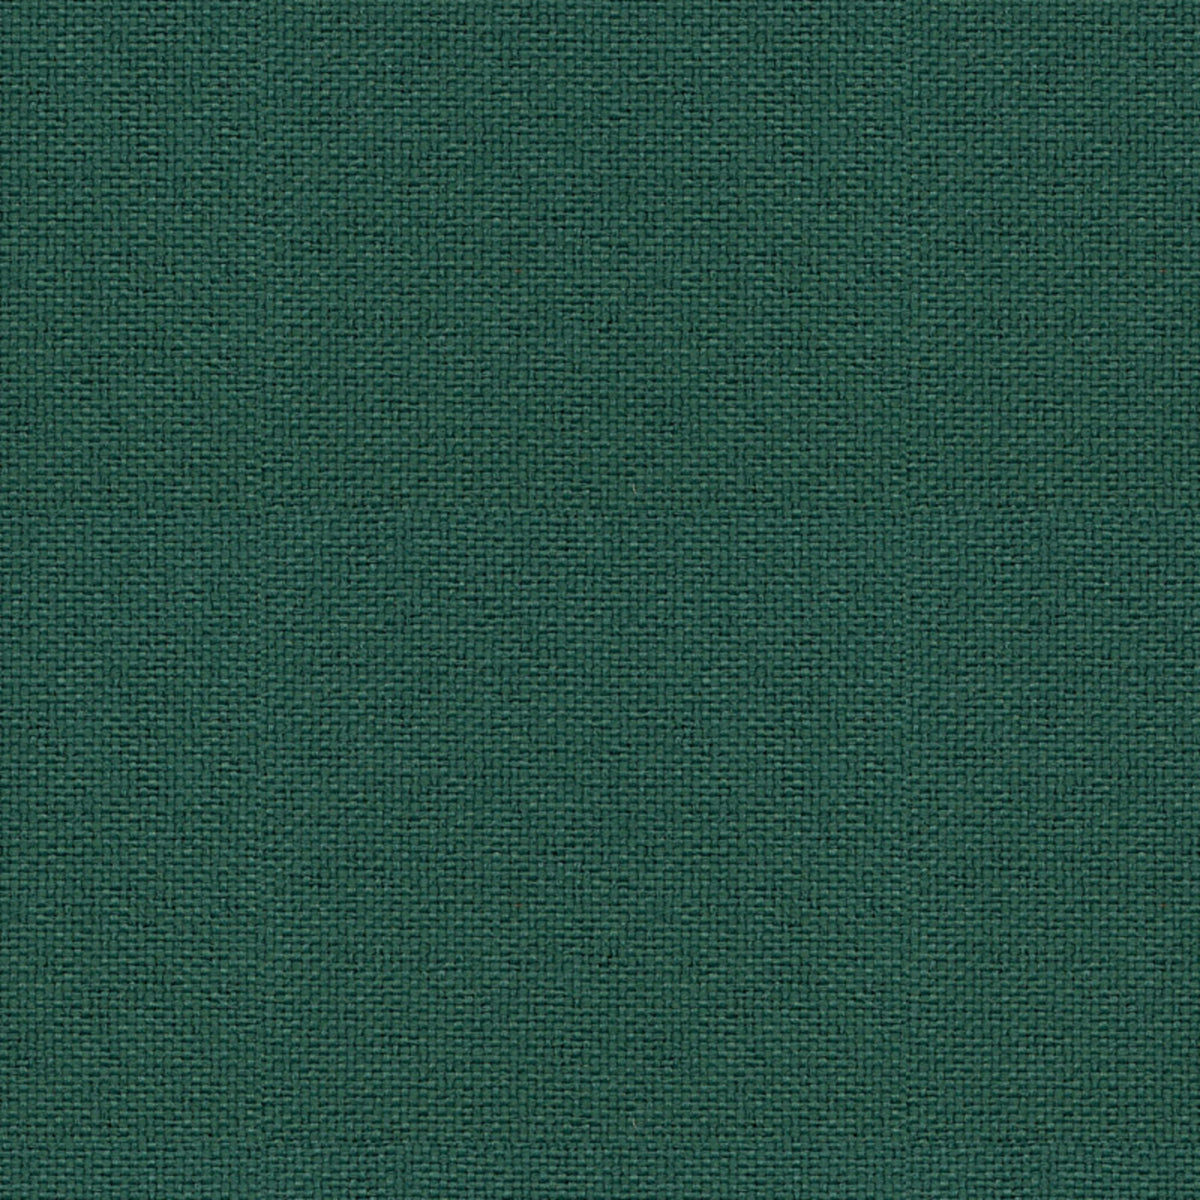 Interweave Emerald Fabric |#| 